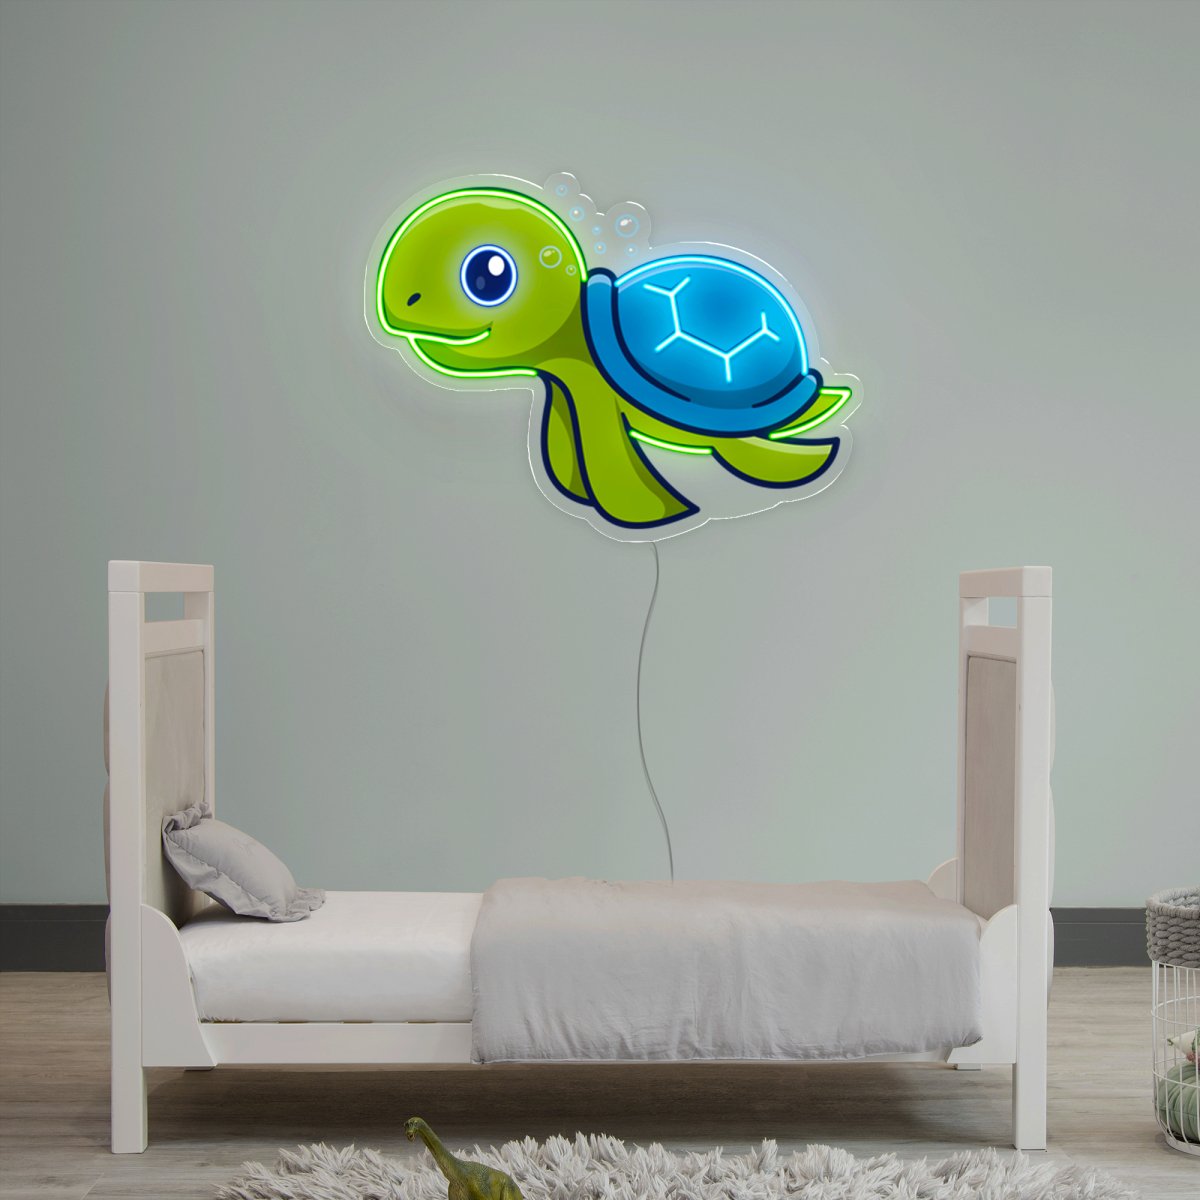 Turtle Artwork Led Neon Sign - Reels Custom